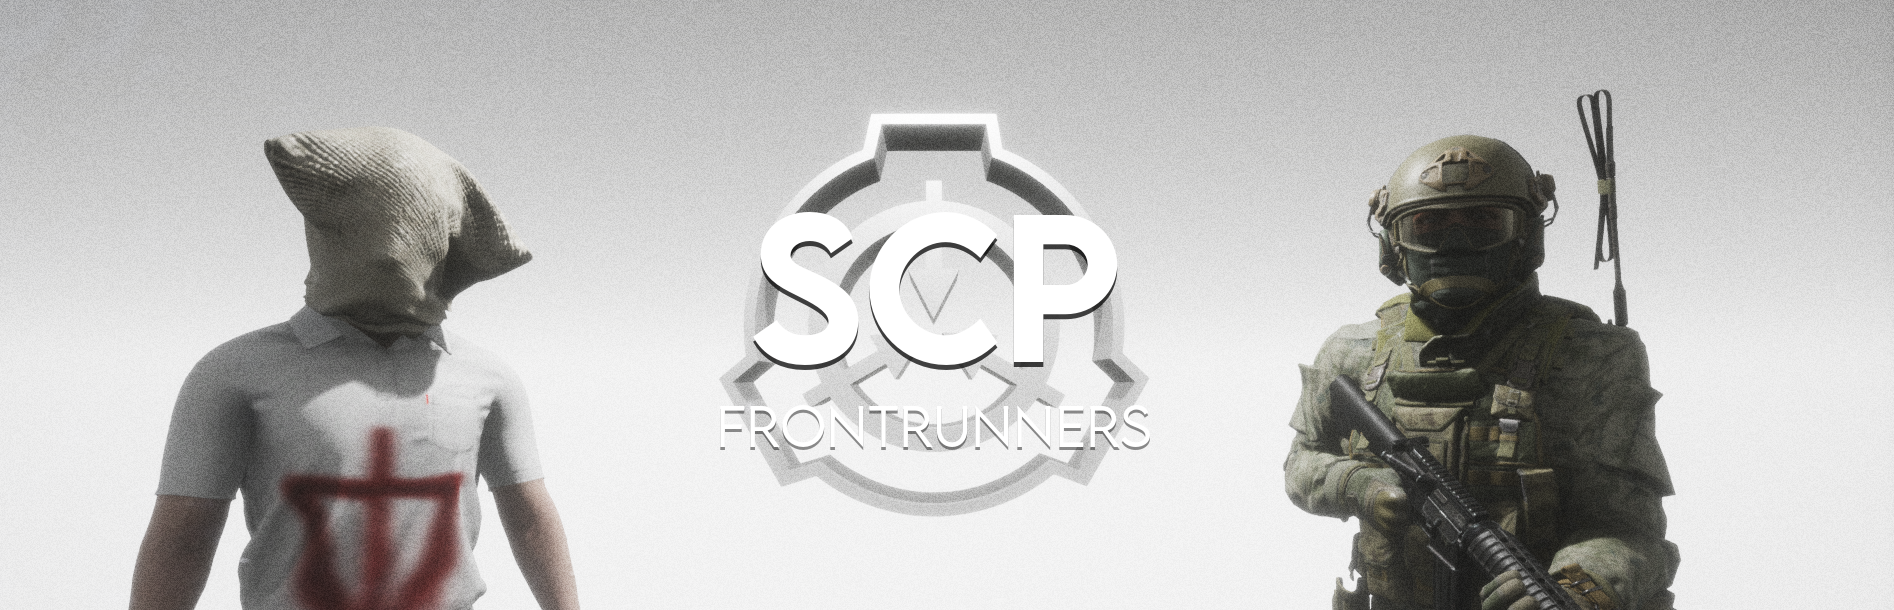 SCP: Frontrunners Prototype